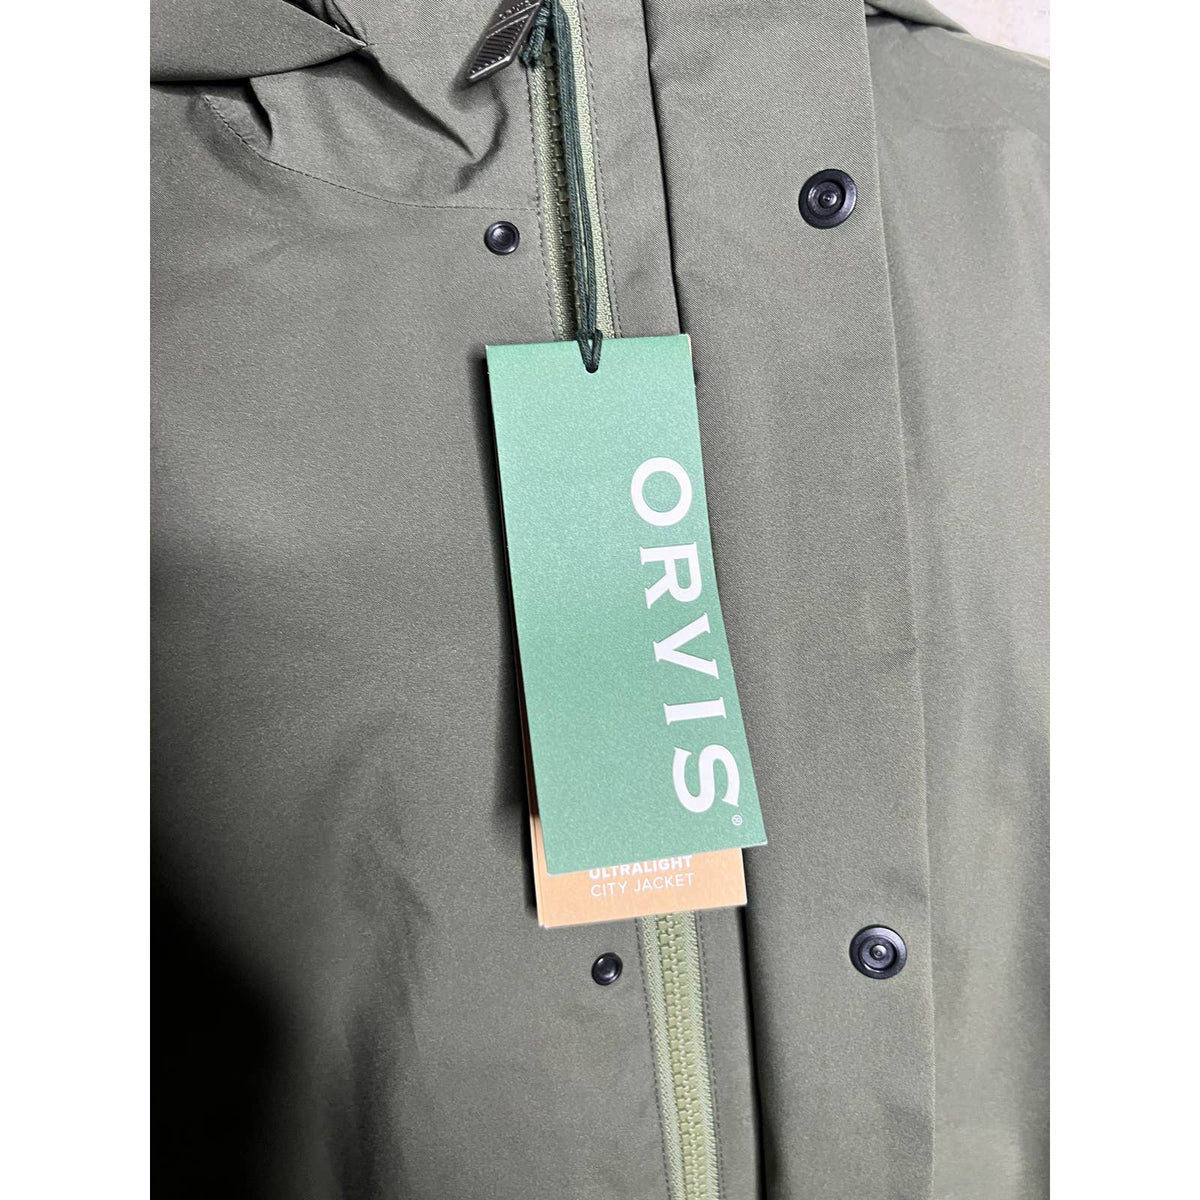 Orvis Mens Green Ultralight City Jacket Sz.Large